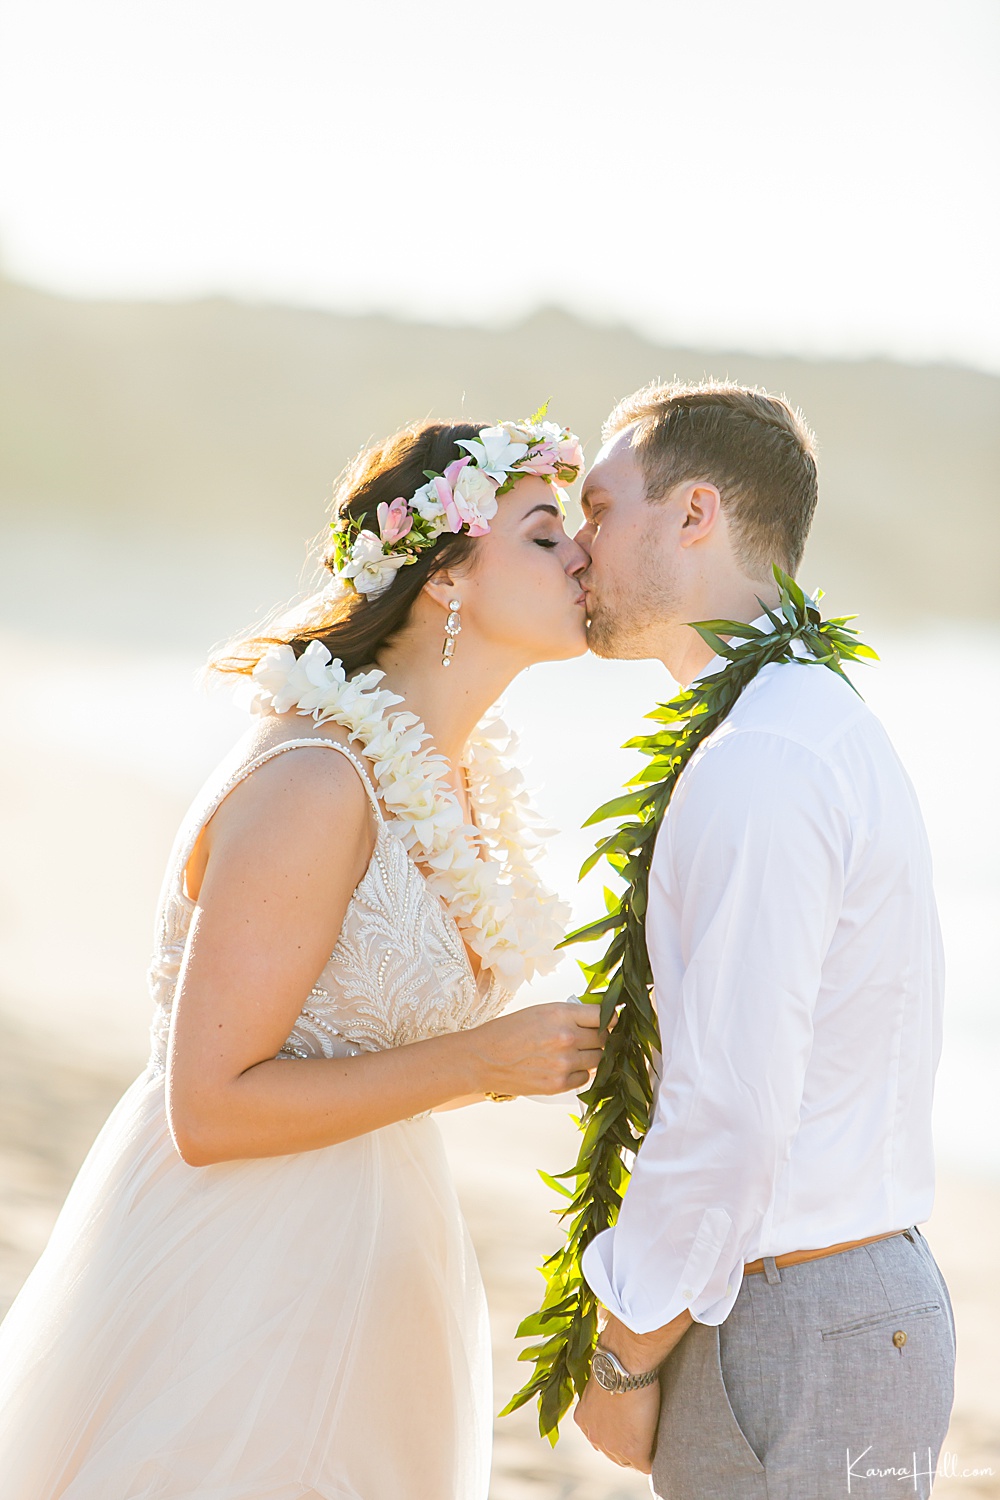 Love on the Horizon - Emilie & Christopher's Maui Vow Renewal